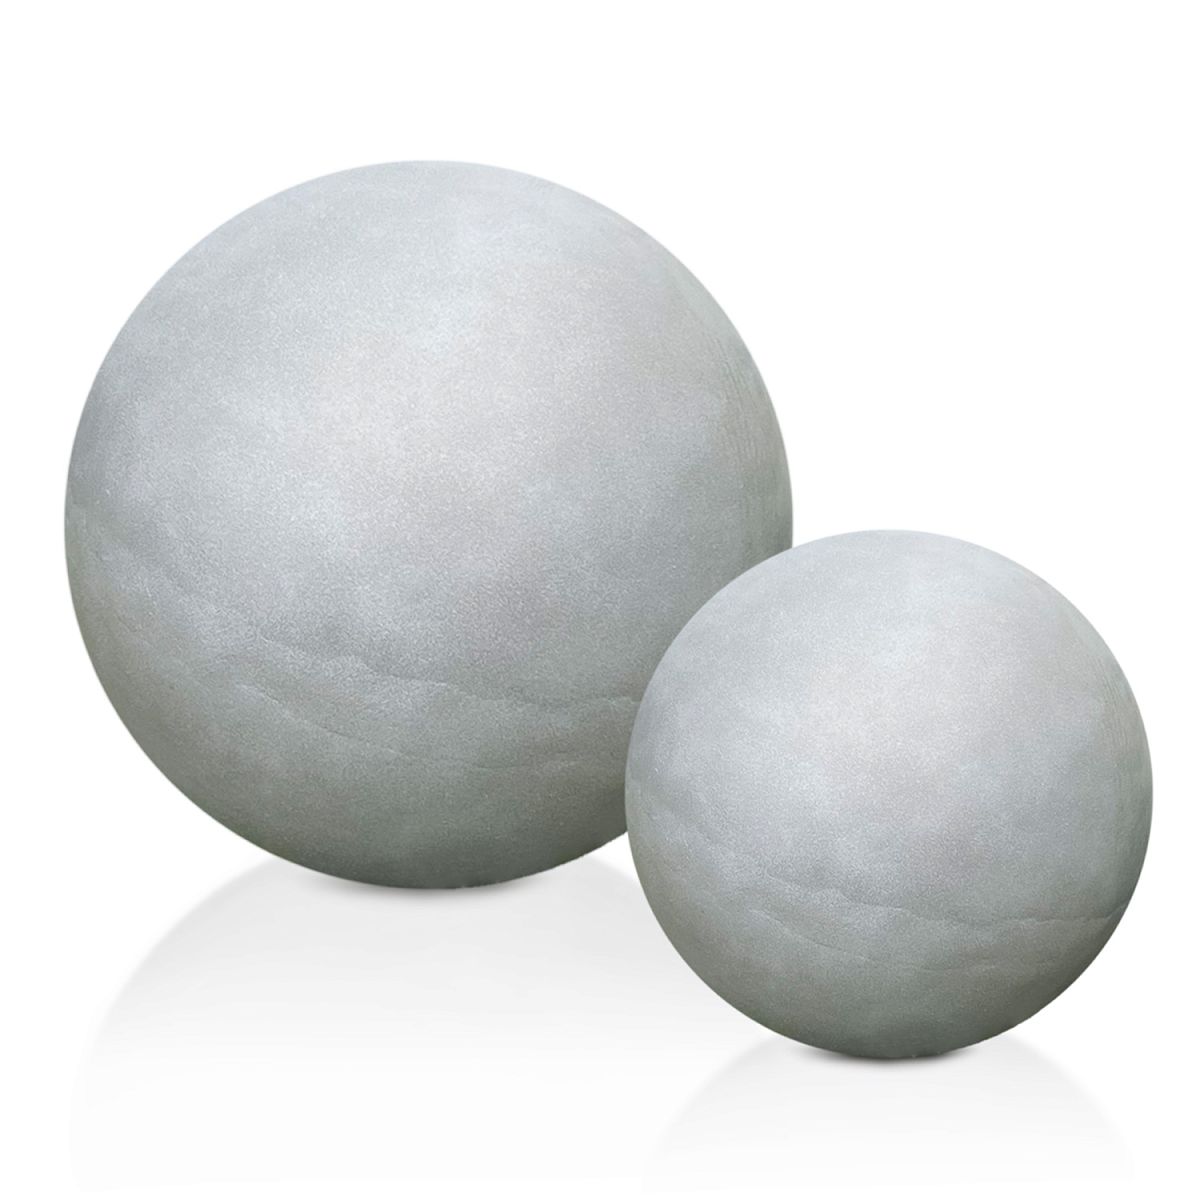 Set of IDEALIST Lite Concrete Effect Outdoor Garden Decorative Balls